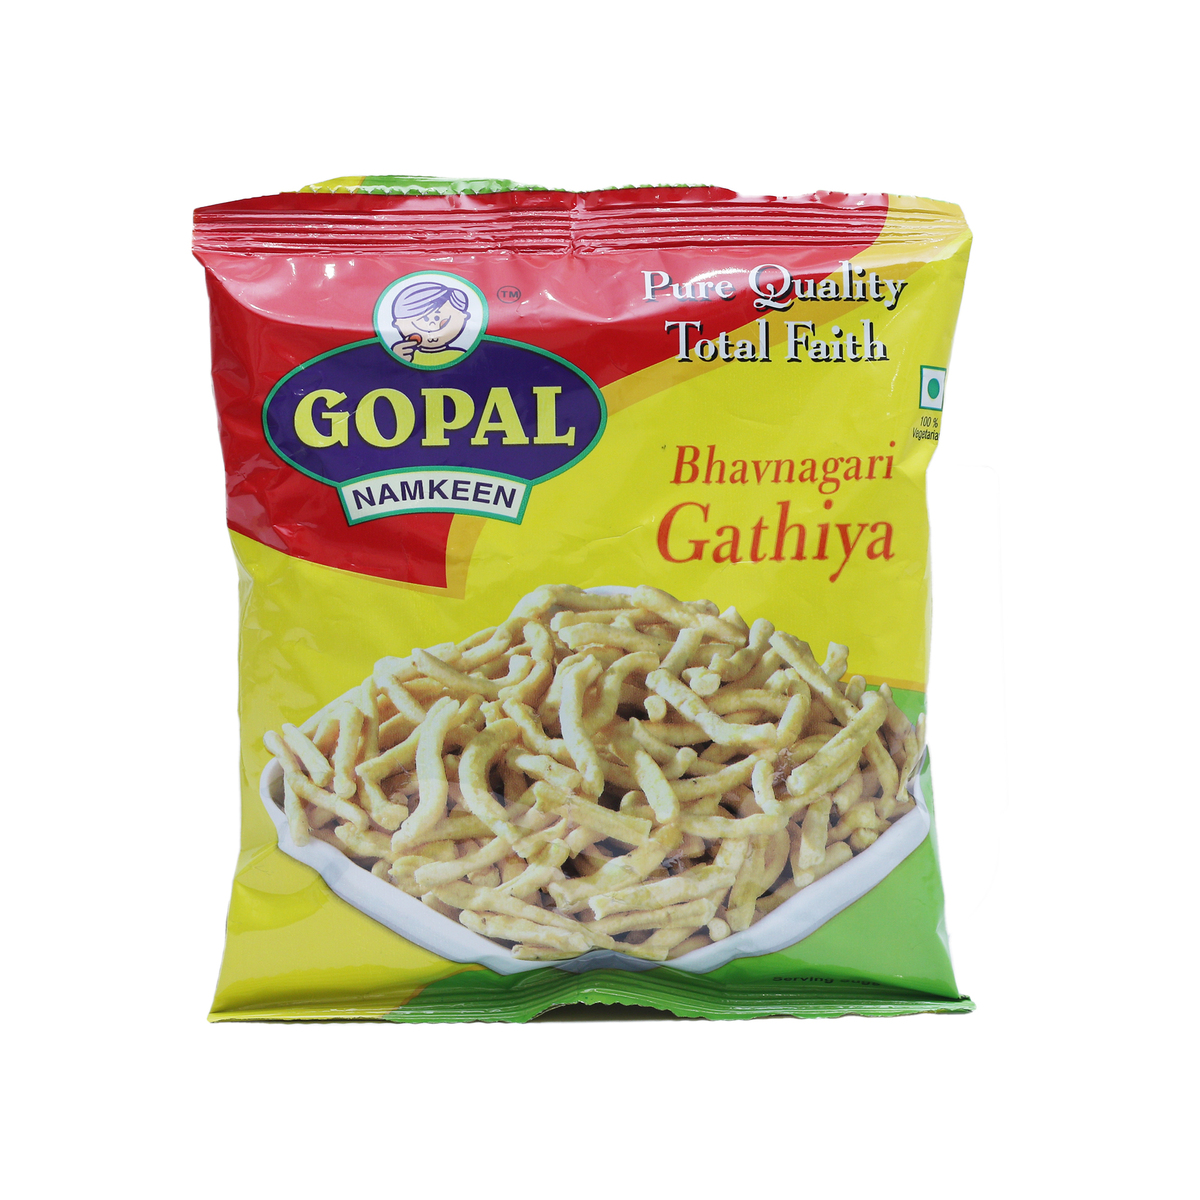 Gopal Bhavnagari Gathiya 85g